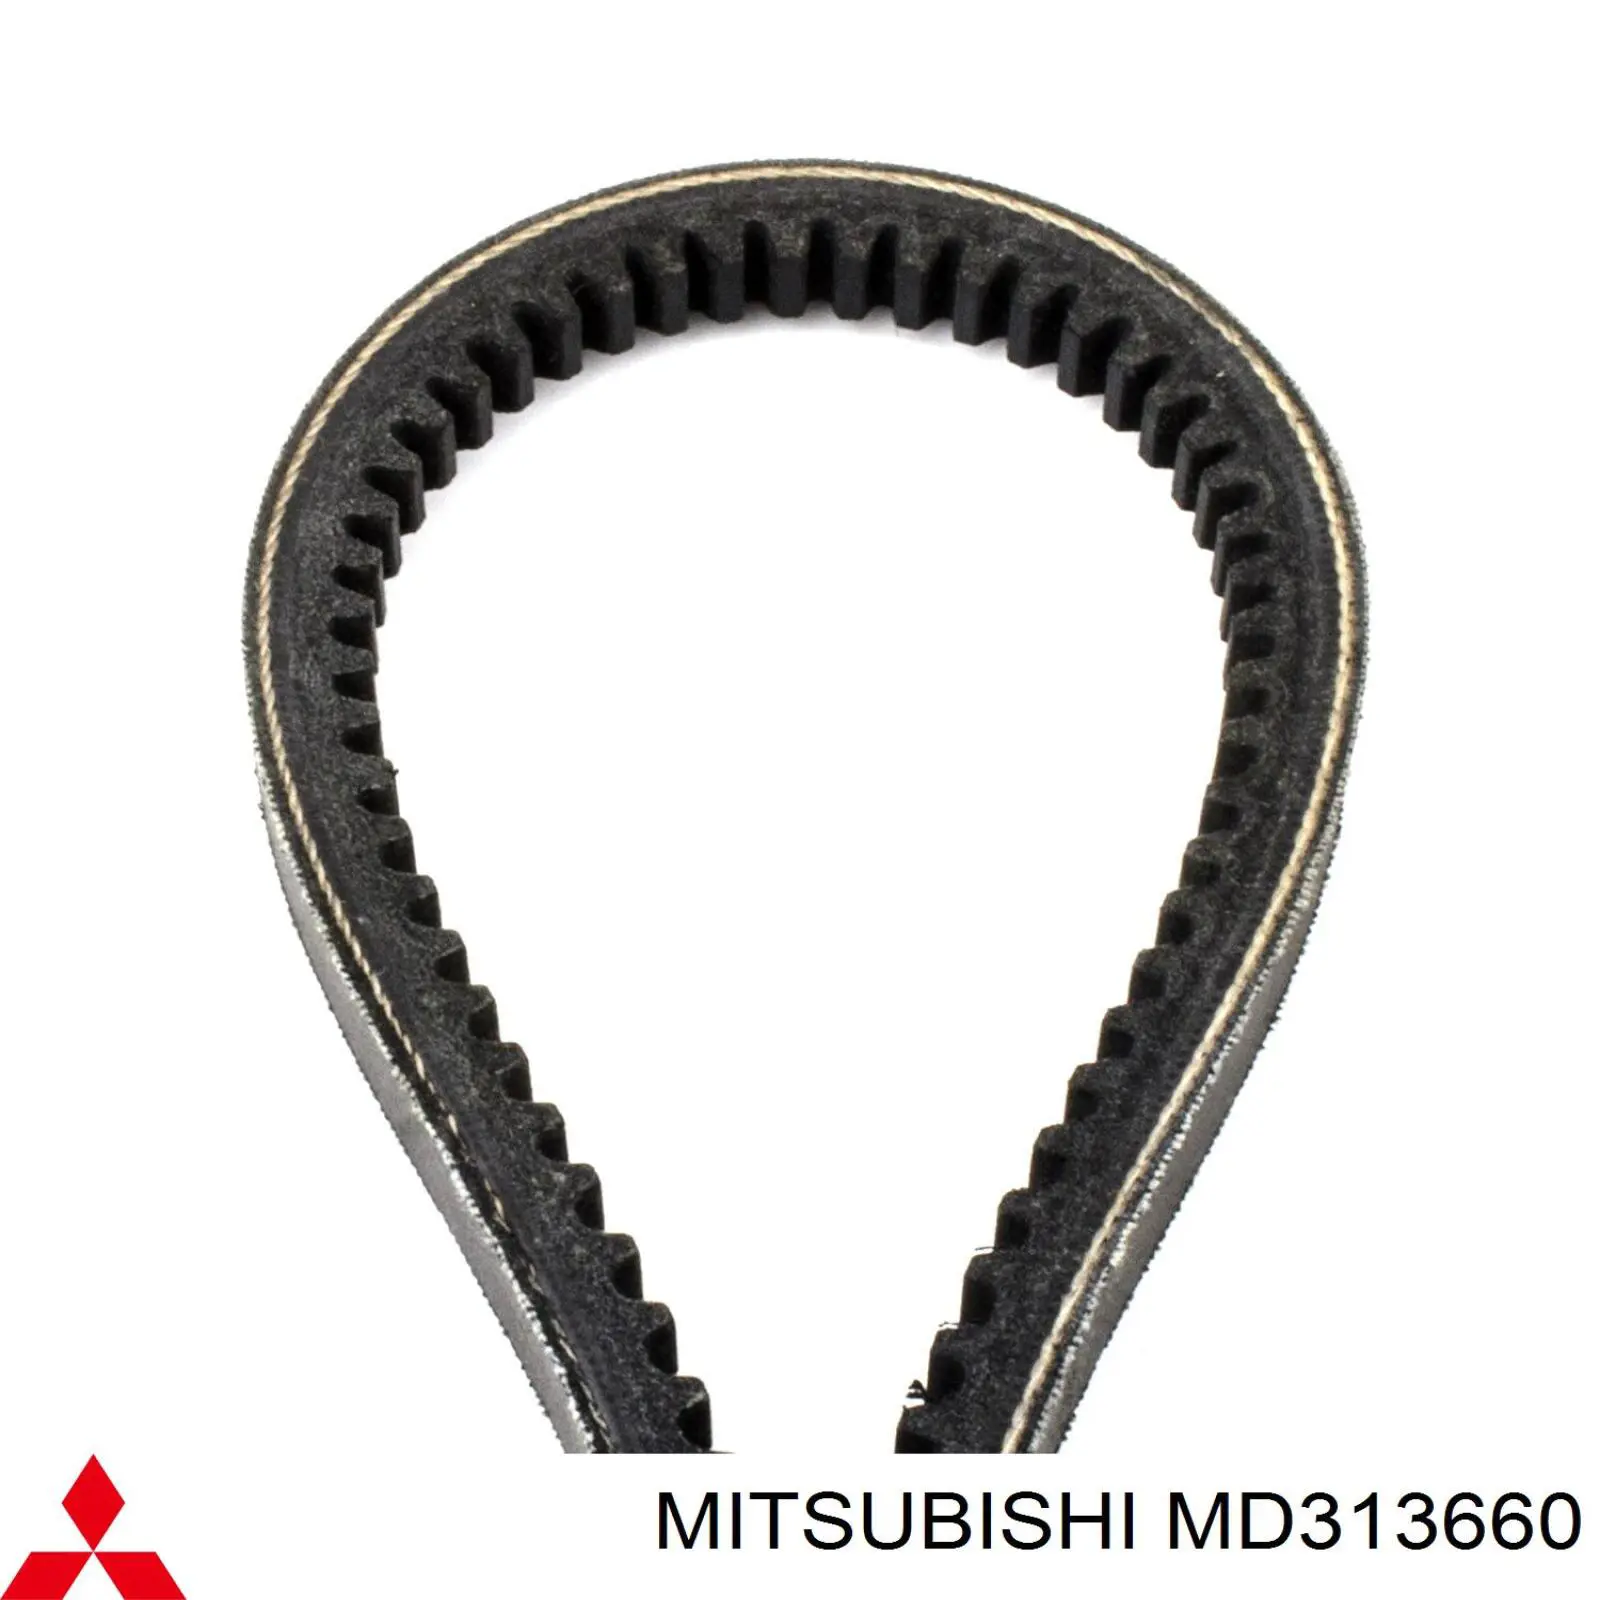 MD313660 Mitsubishi correa trapezoidal